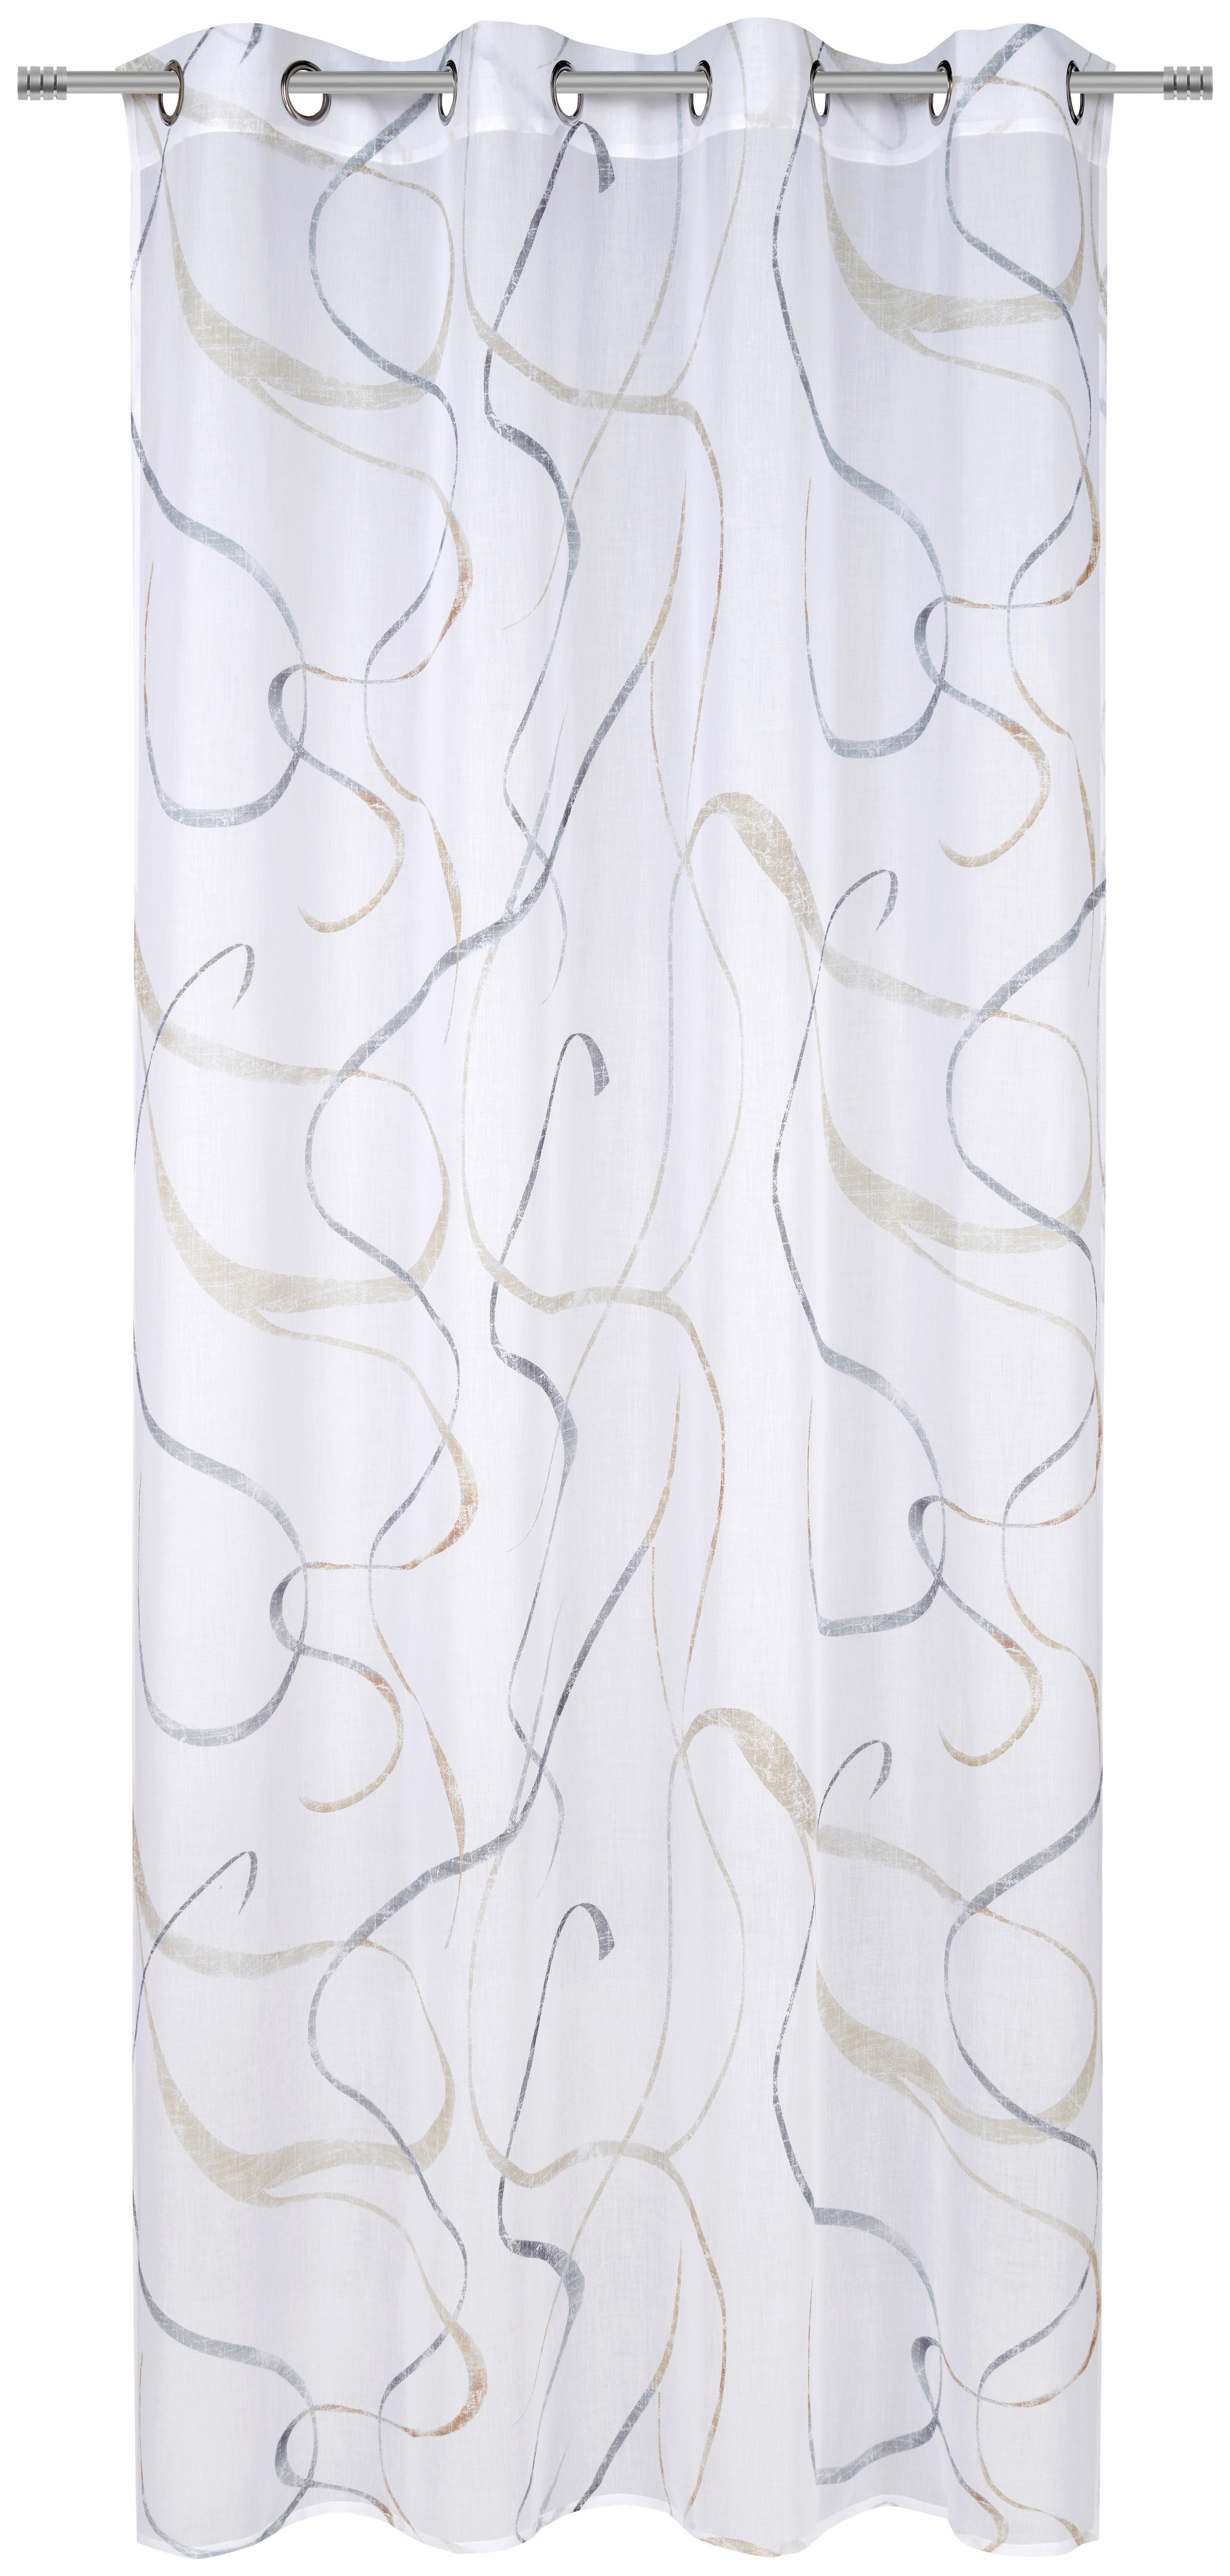 ÖLJETTLÄNGD halvtransparent  - beige, Klassisk, textil (140/245cm) - Esposa